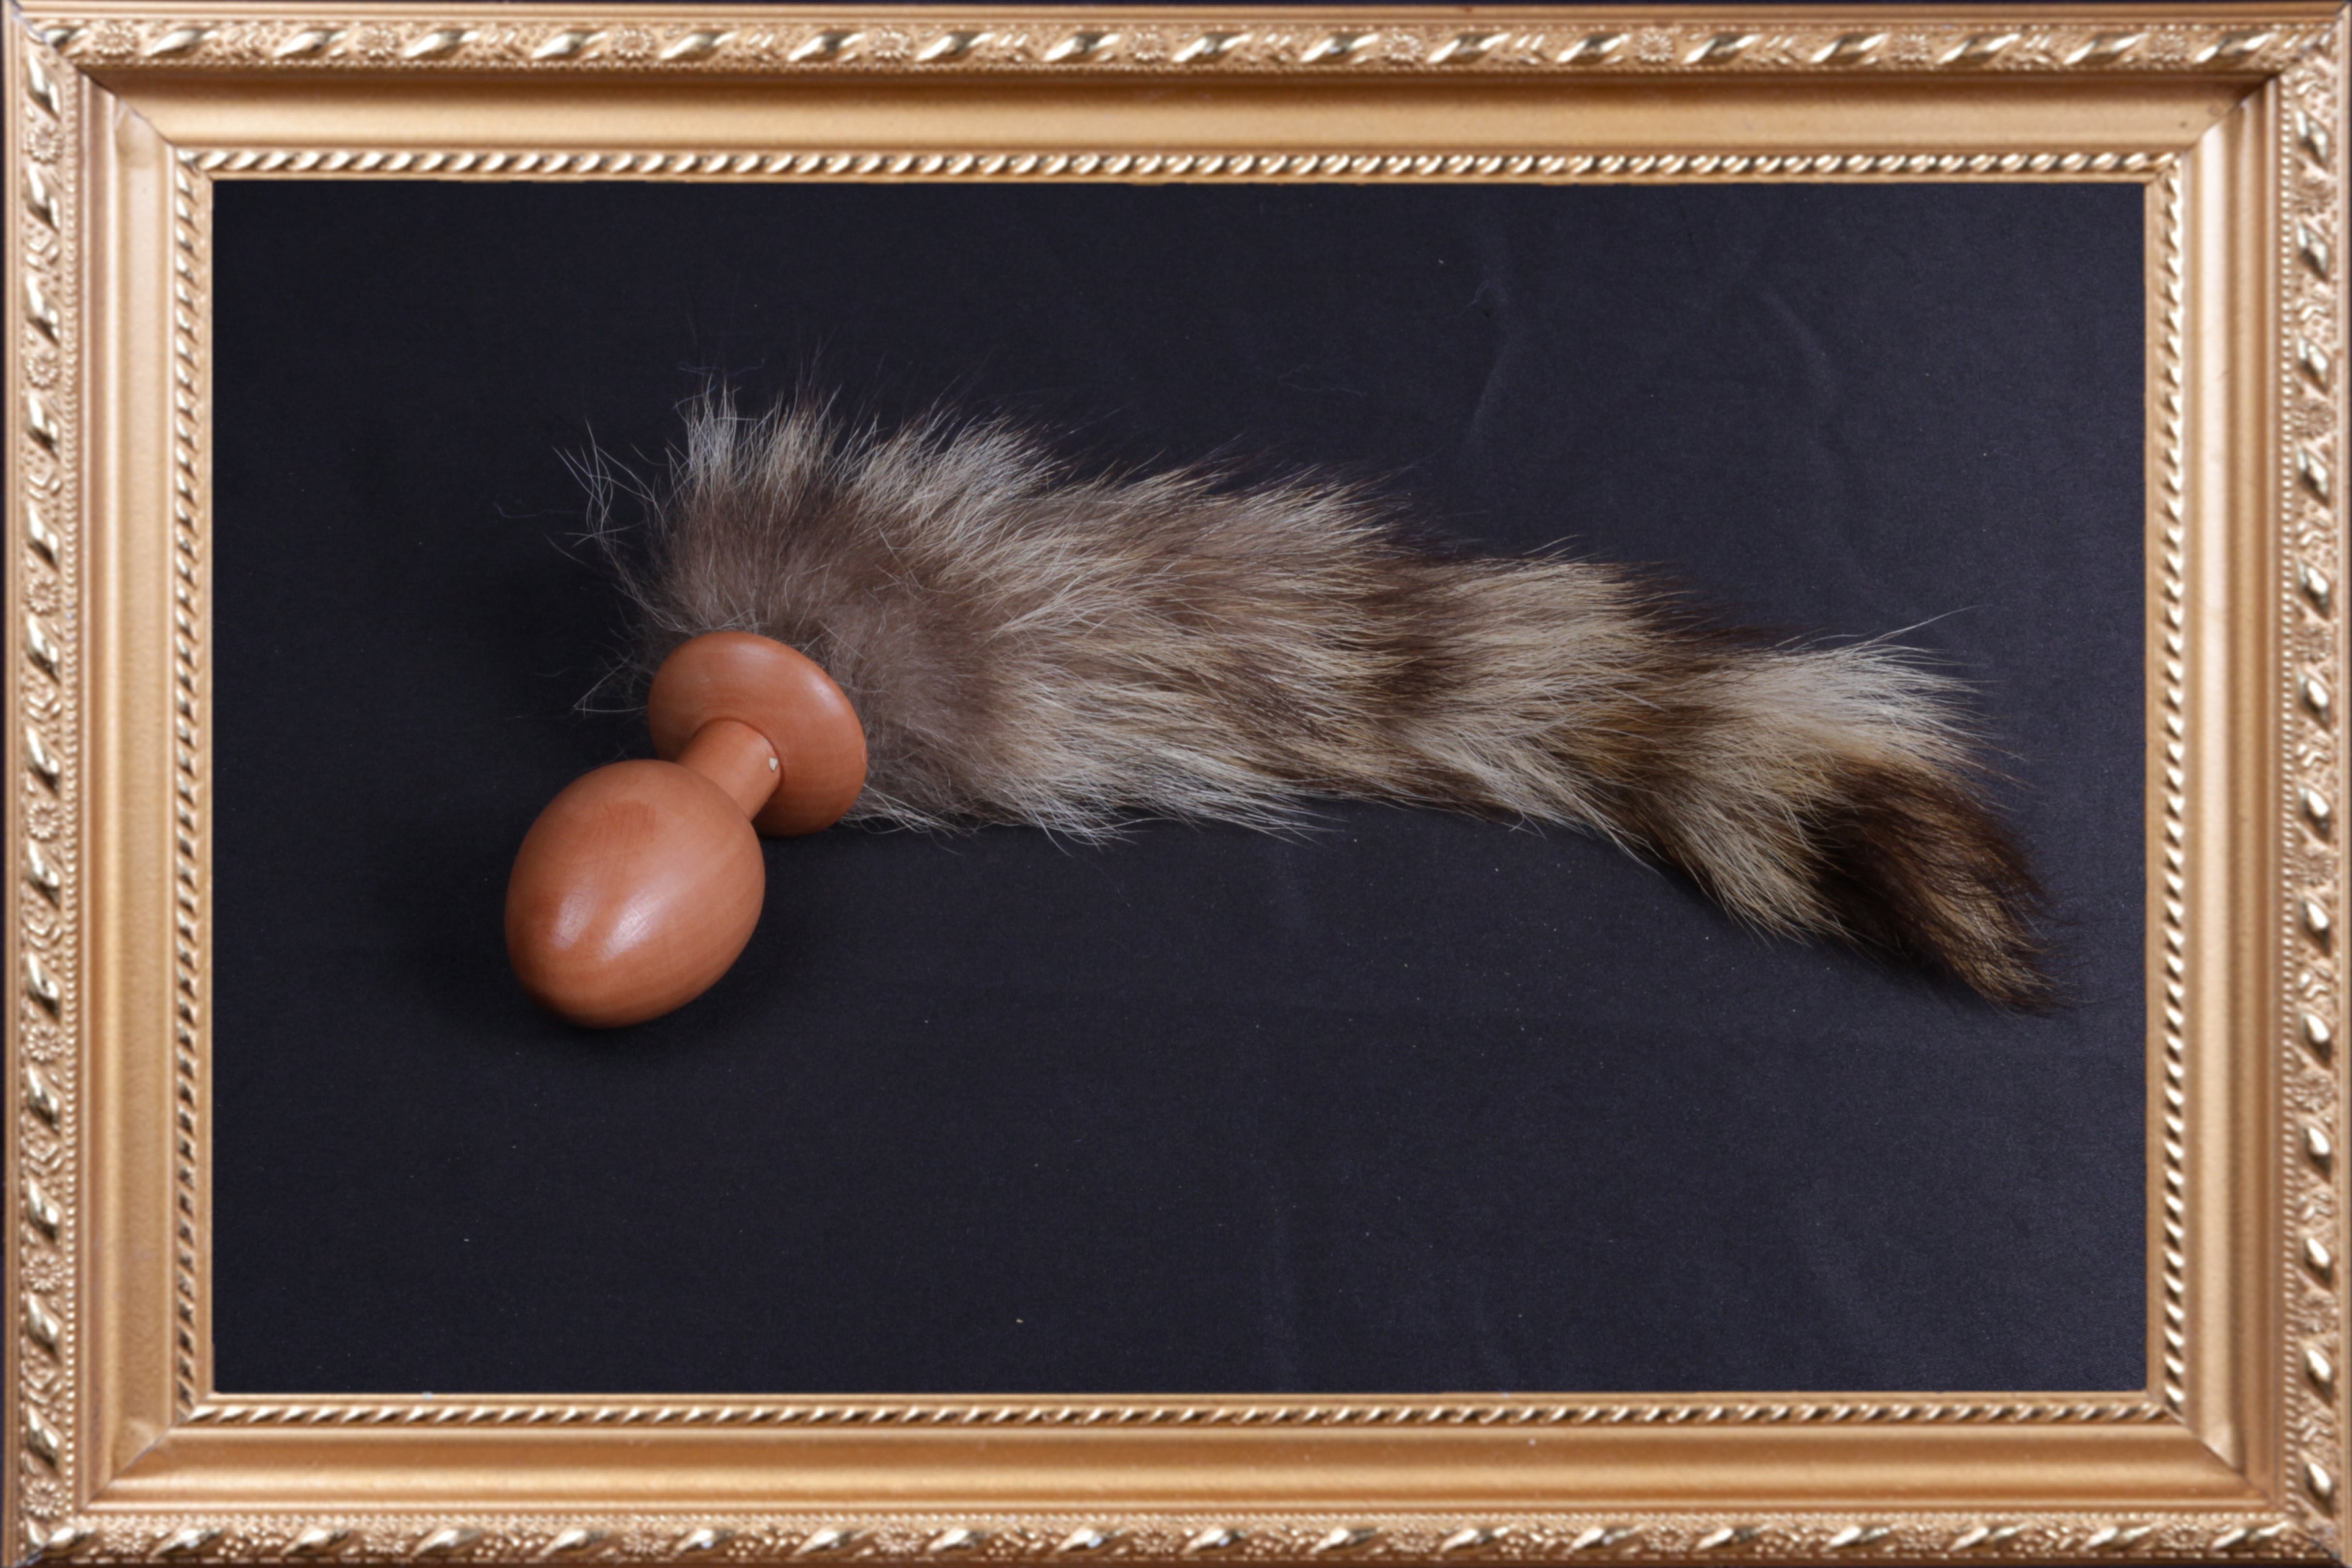 OACHKATZLSCHWOAF Birne Waschbär || Wooden Furry Tail Anal Butt Plug Holz|| Fox Bunny Raccoon || Sex Toy || Handmade by Holz-Knecht.at